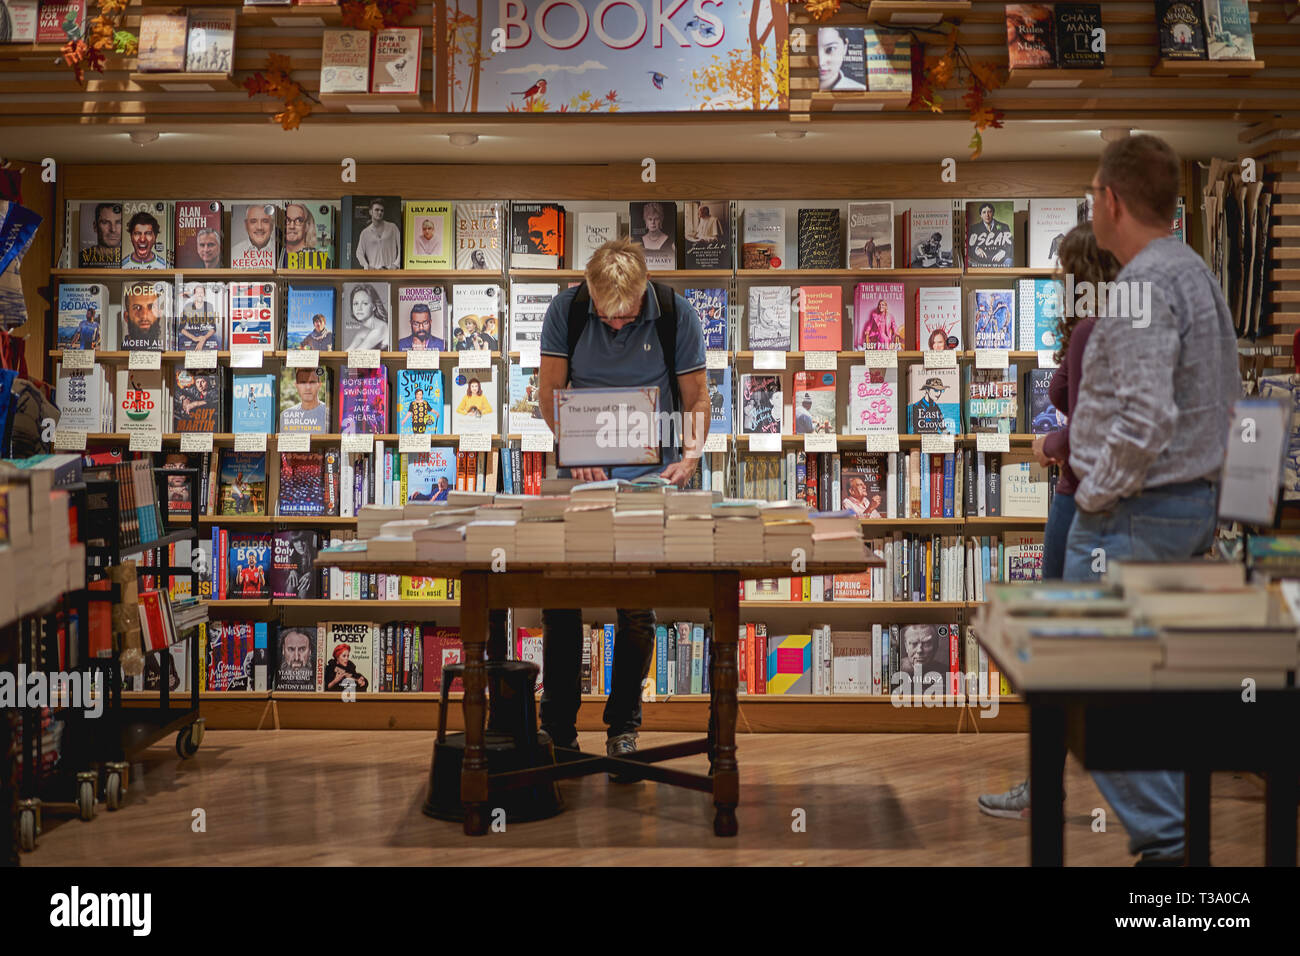 Cambridge, UK - December, 2018. Customers in a bookstore. Stock Photo